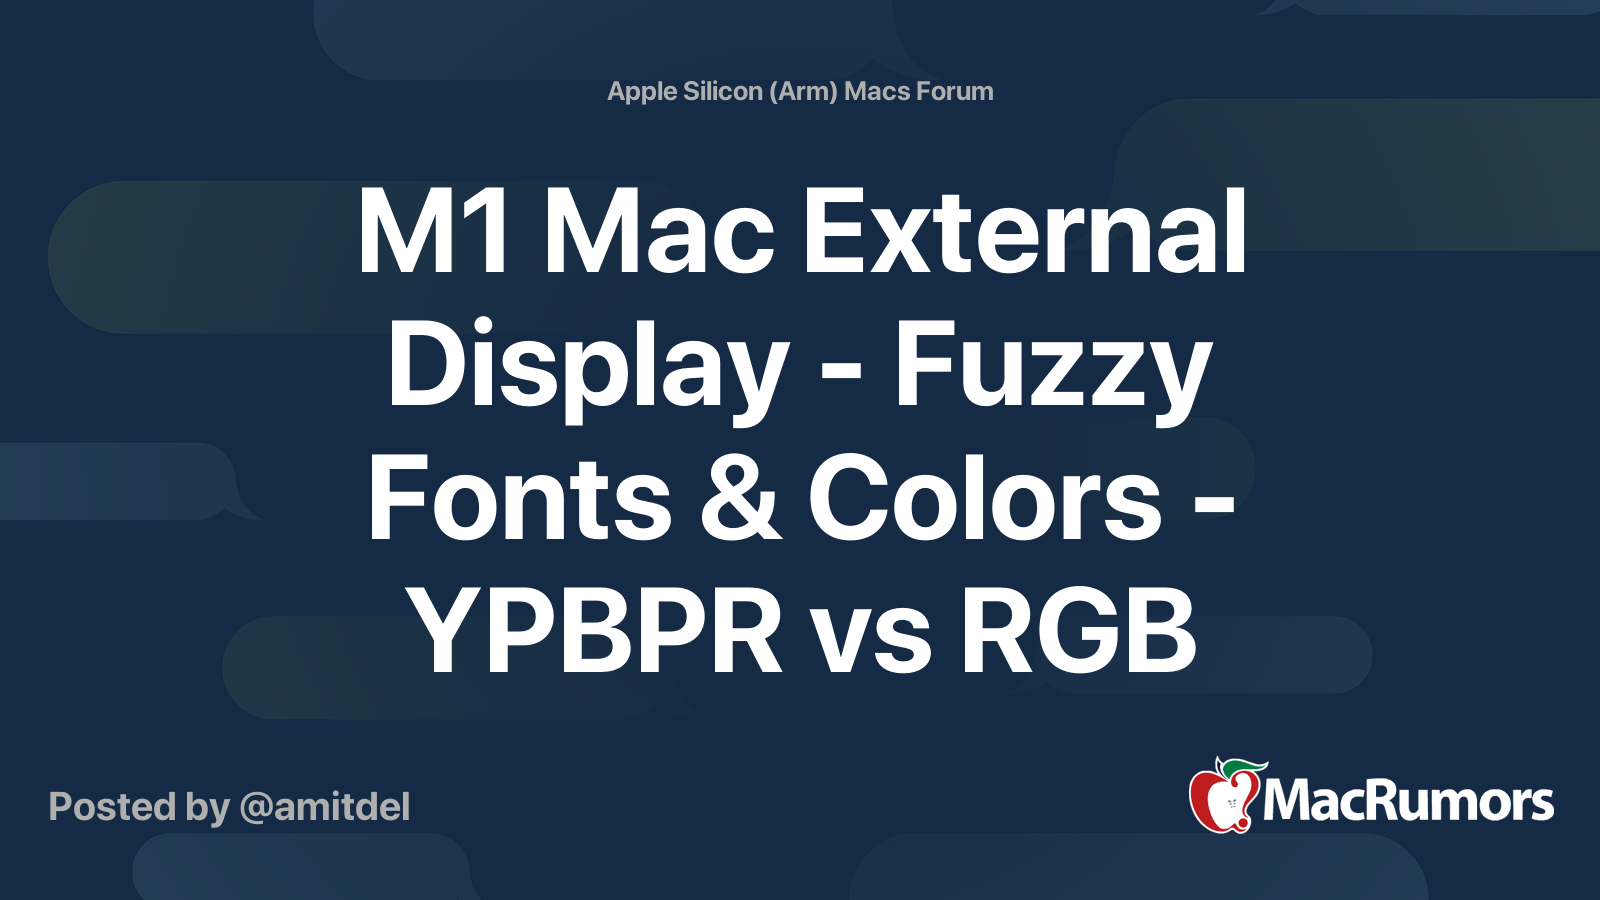 M1 Mac External Display - Fuzzy Fonts & Colors - YPBPR vs RGB